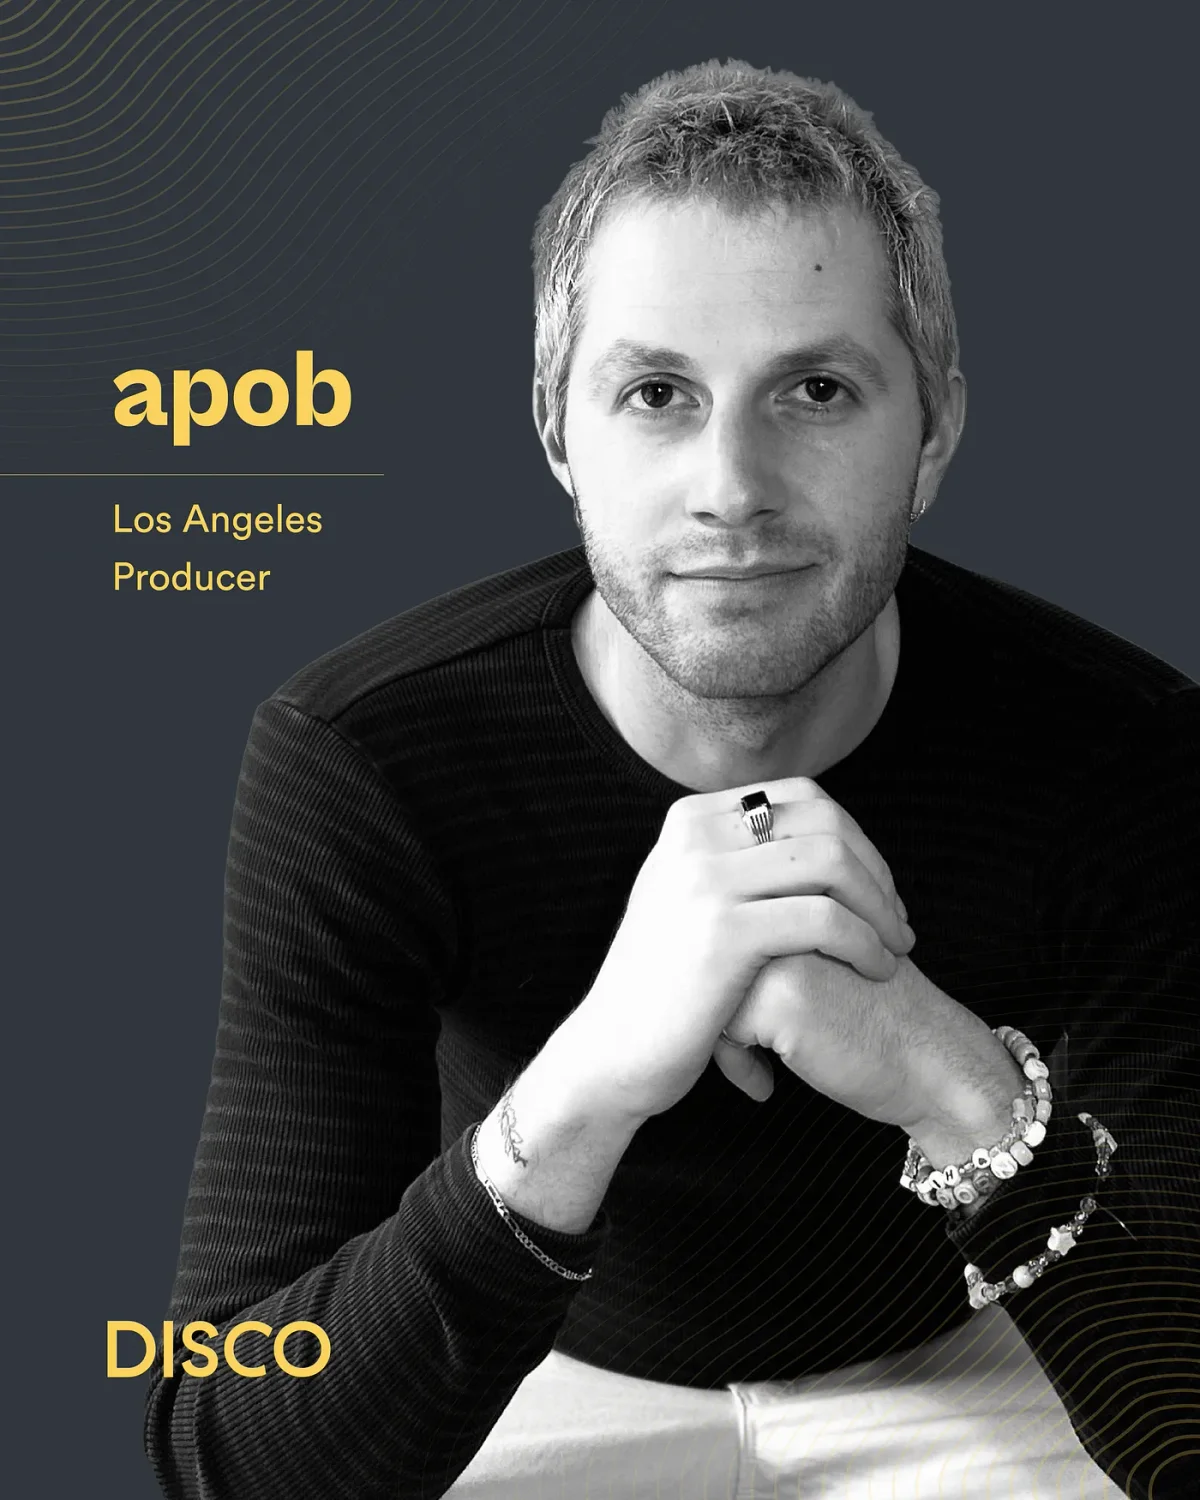 LA based producer, apob